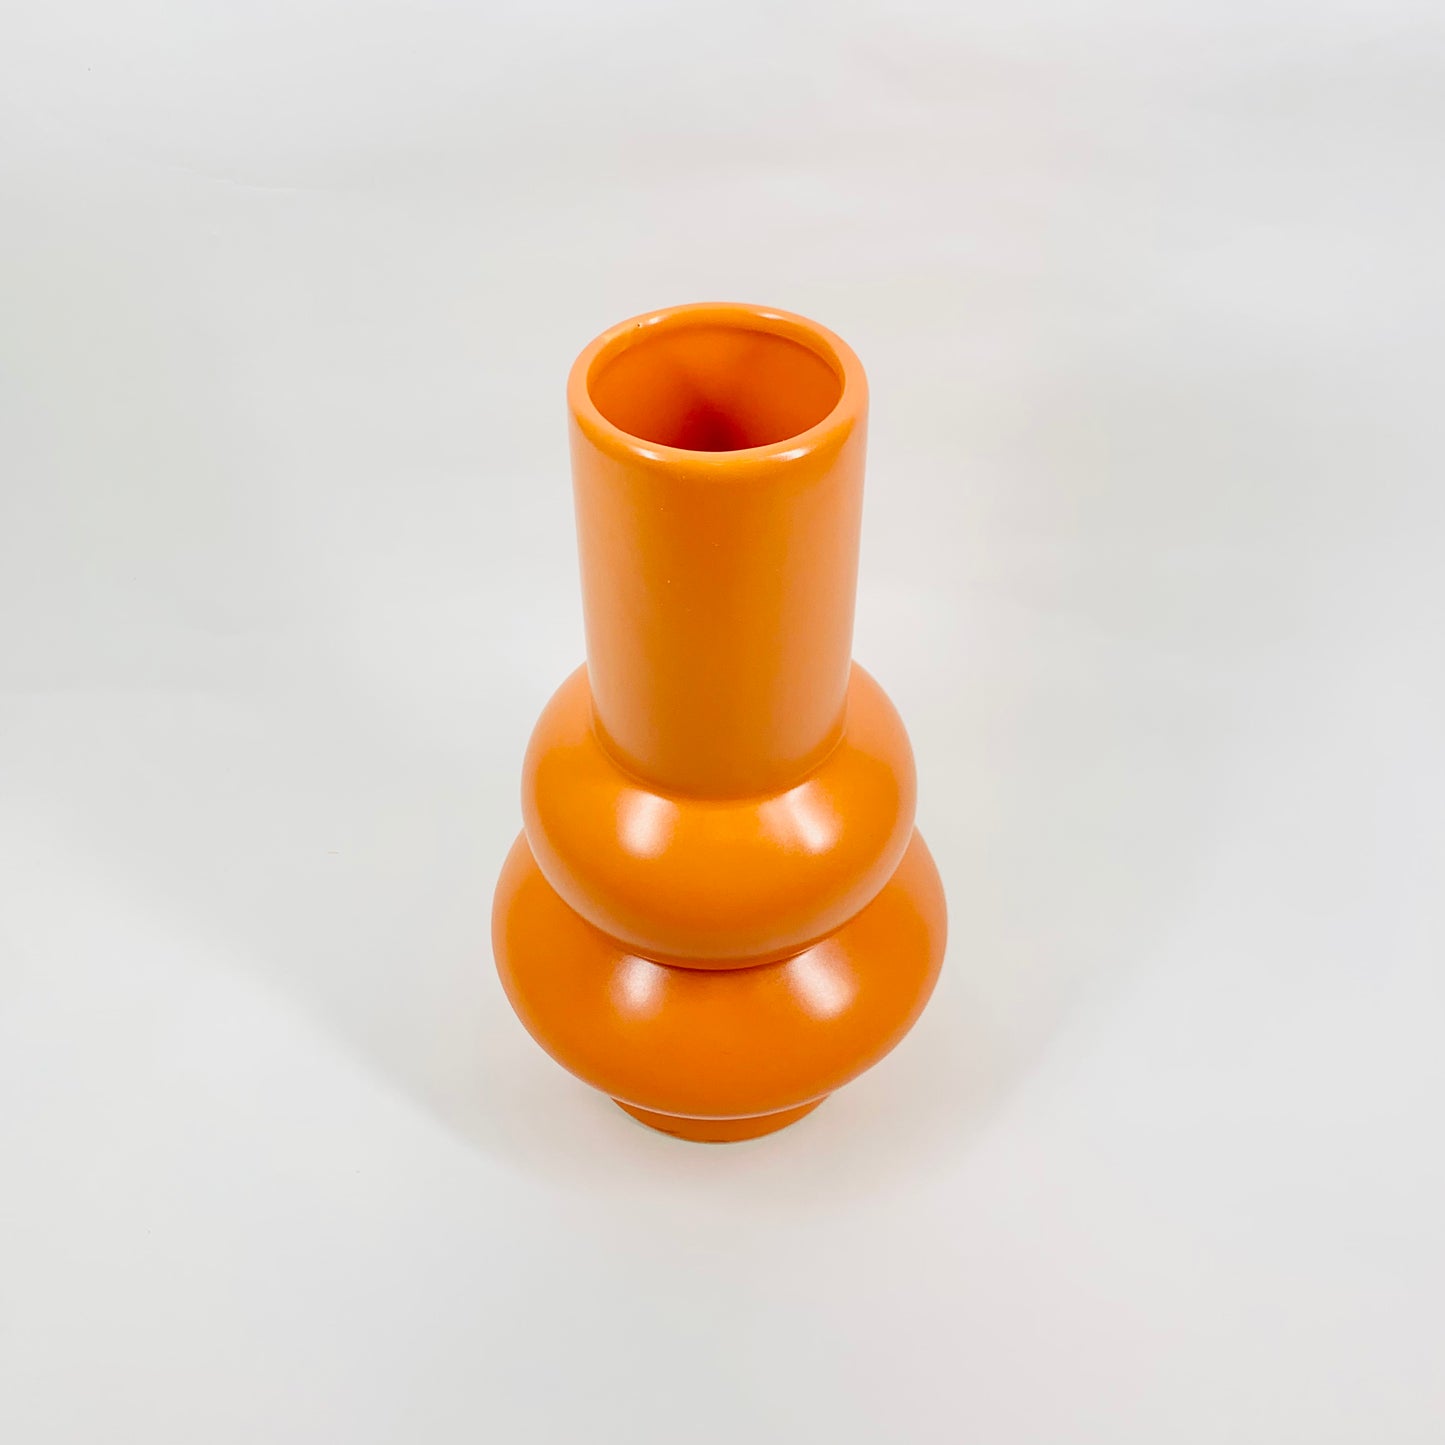 Rare 1980s Memphis style Bel Mondo orange porcelain vase